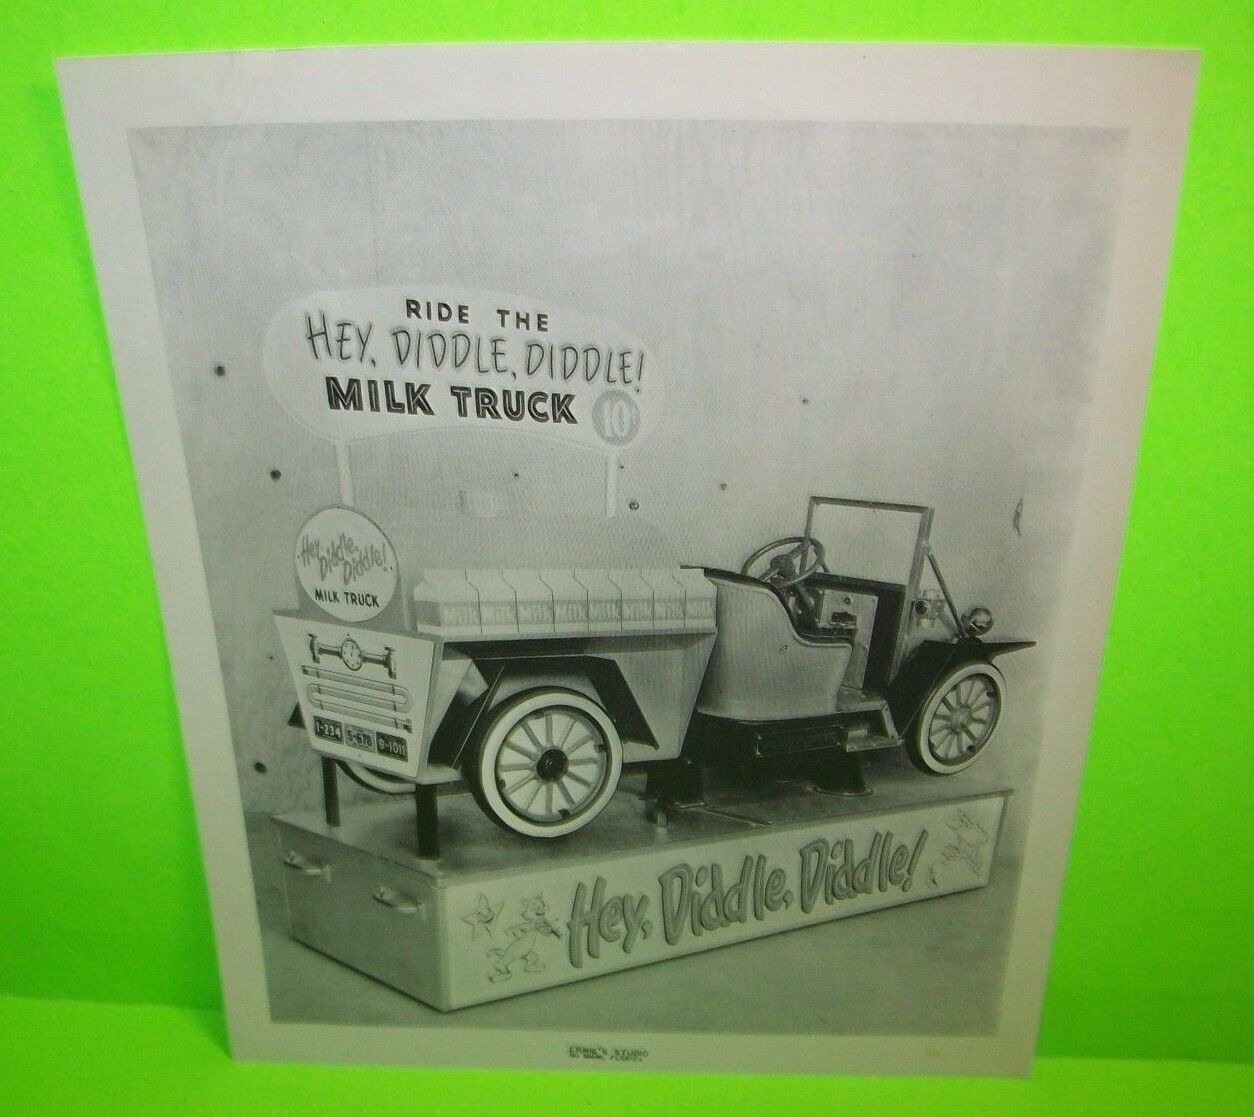 Ride The Hey Diddle Diddle Milk Truck Vintage Kiddie Ride Coin-Op B/W Photo